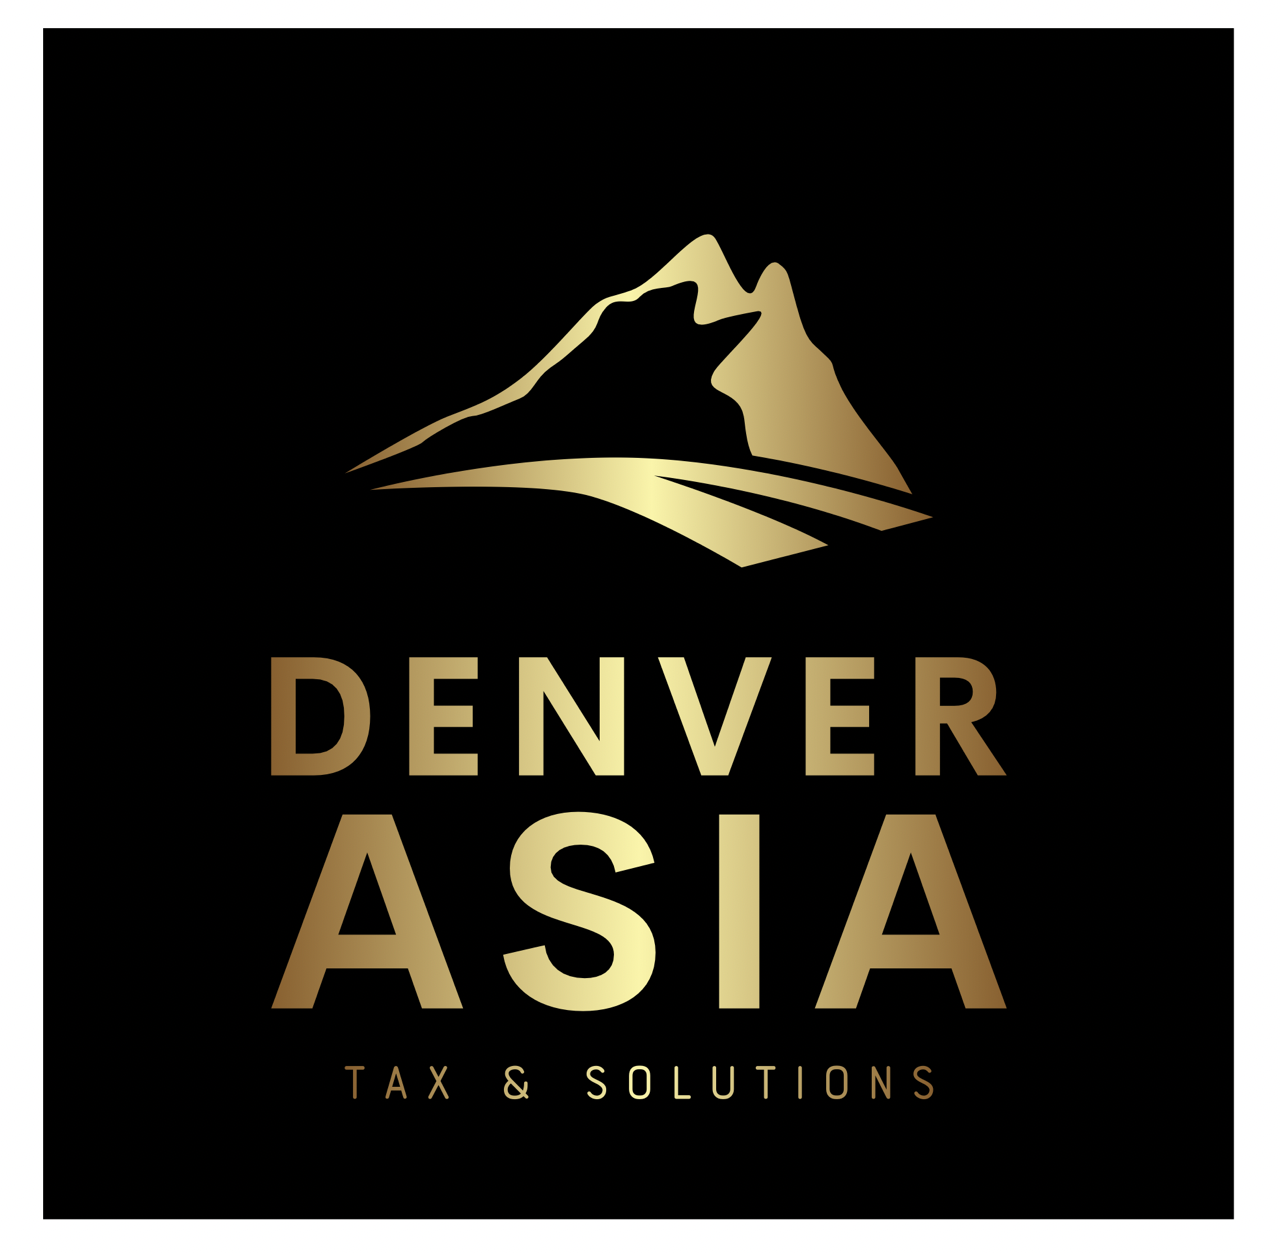 Denver Asia Tax & Solutions